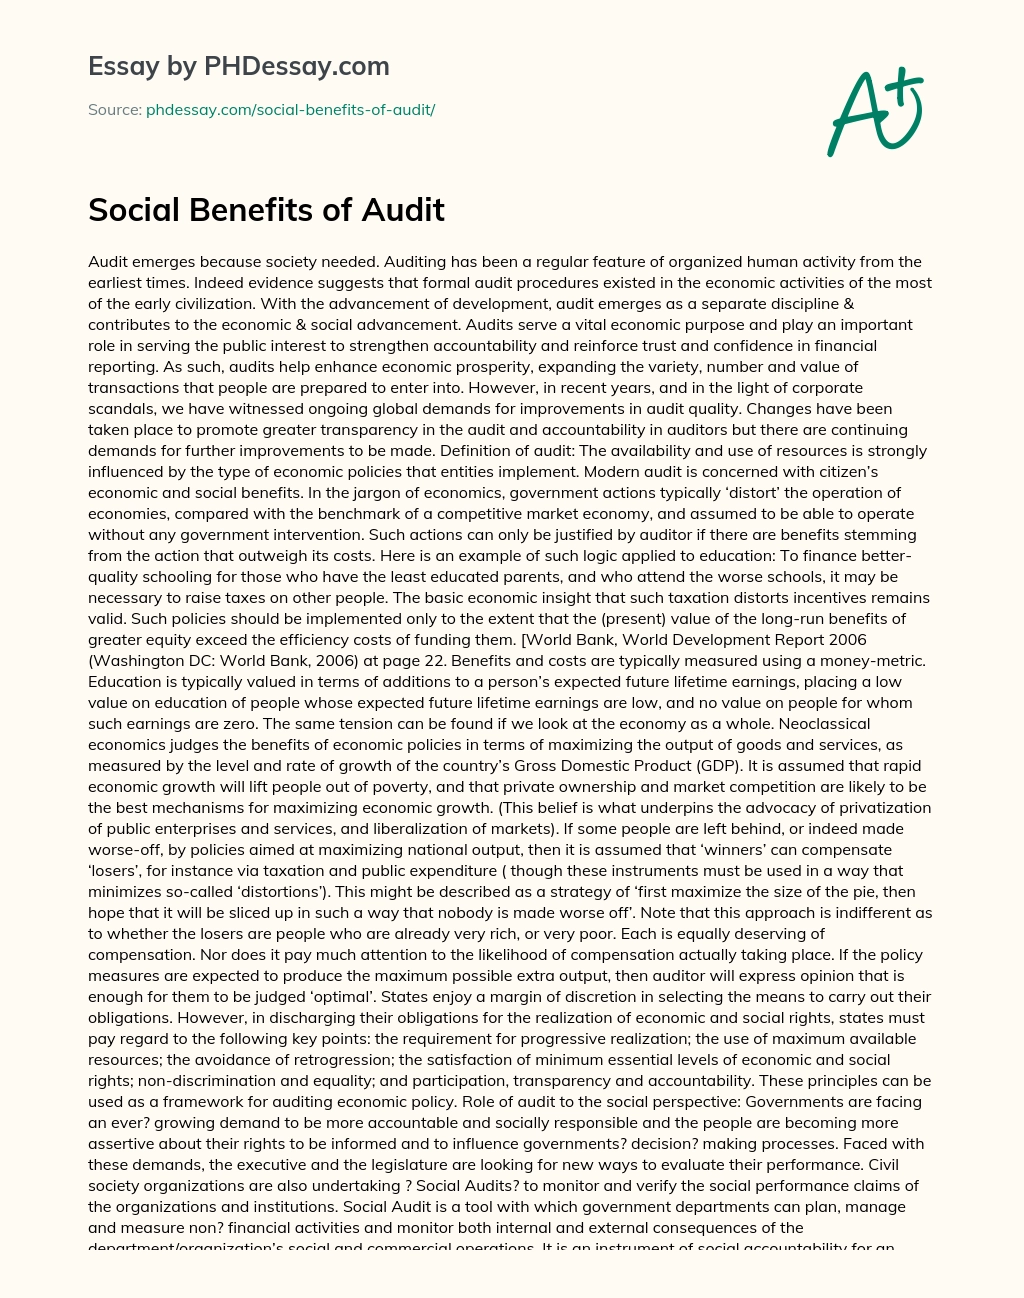 Social Benefits of Audit essay